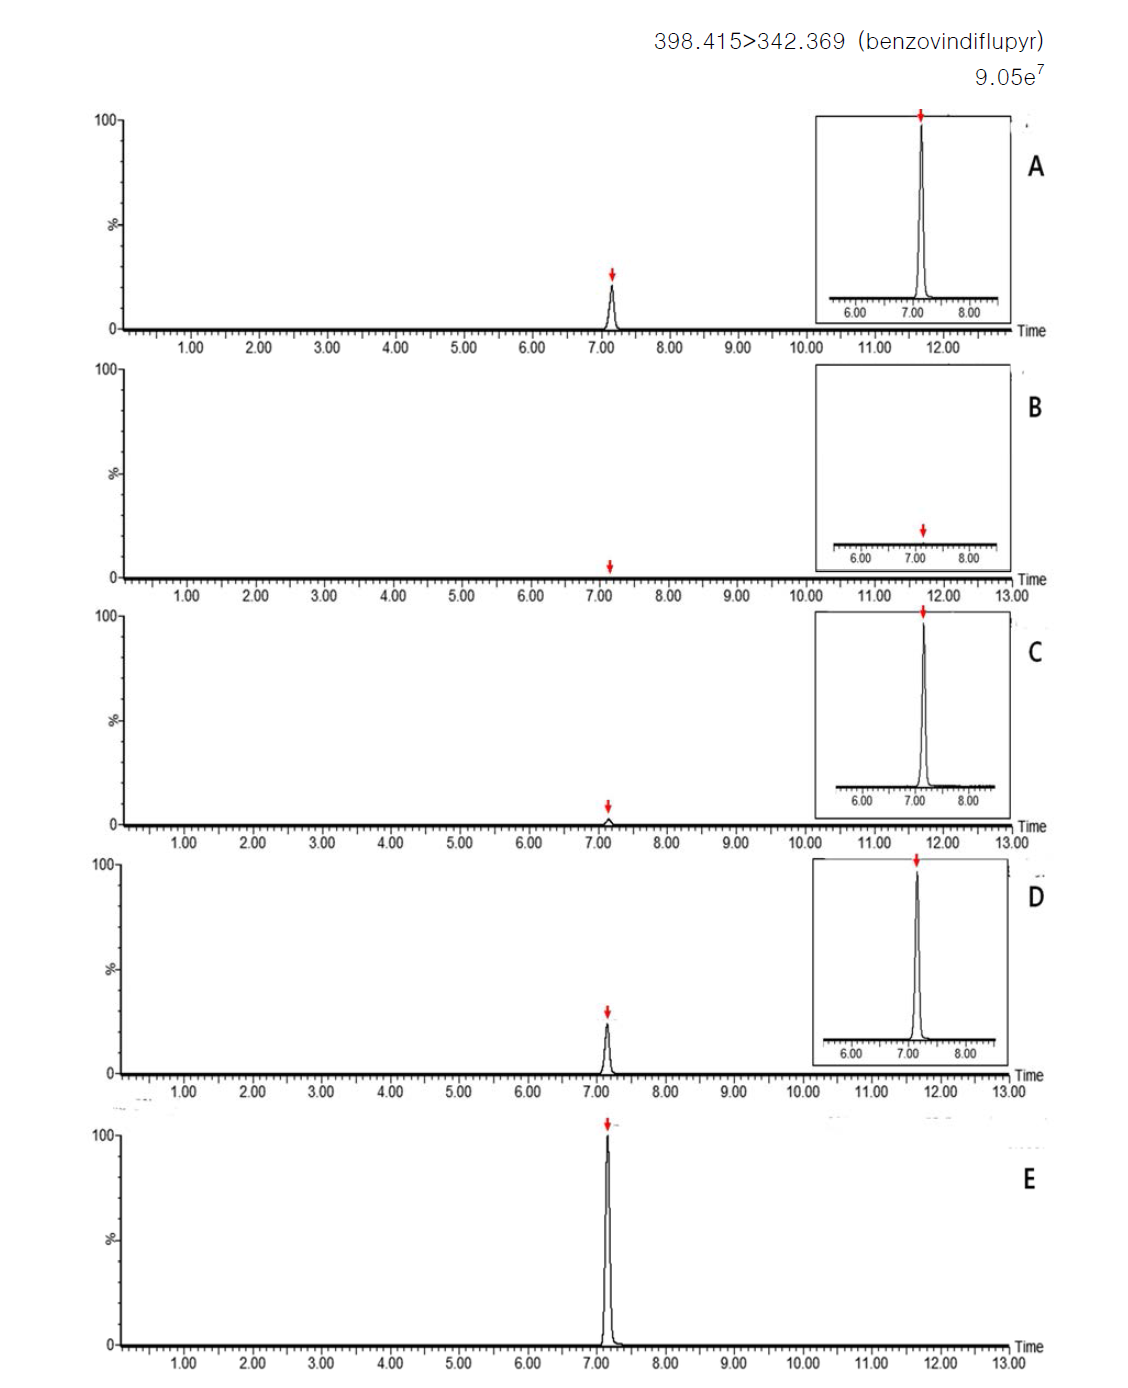 Representative MRM(quantification ion) chromatograms of benzovindiflupyr corresponding to: (A) standard solution at 0.05 mg/kg, (B) potato control, (C) spiked at 0.005 mg/kg, (D) spiked at 0.05 mg/kg and (E) spiked at 0.25 mg/kg